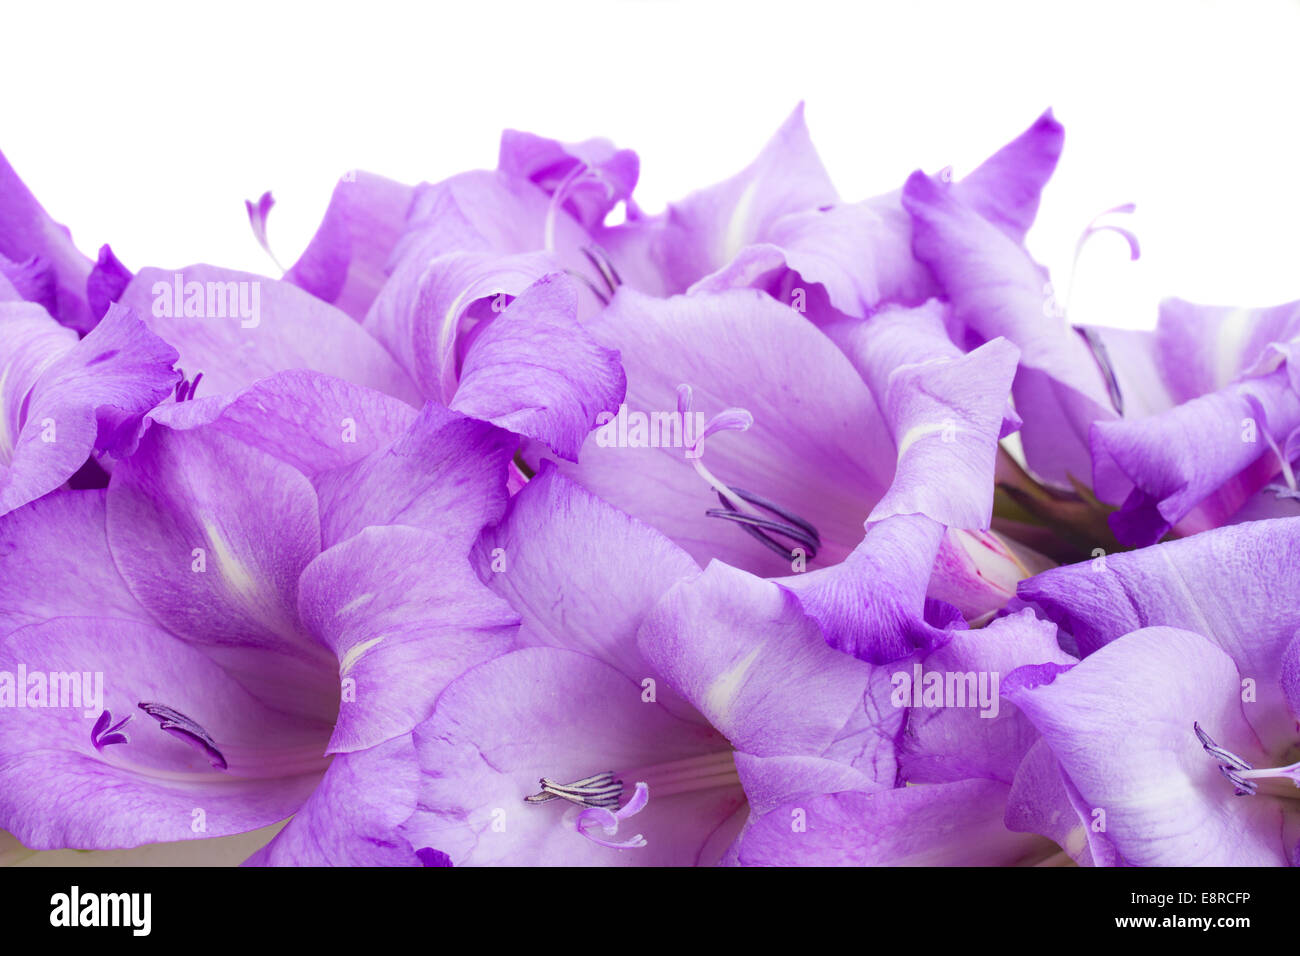 biorder of gladiolus flowers Stock Photo